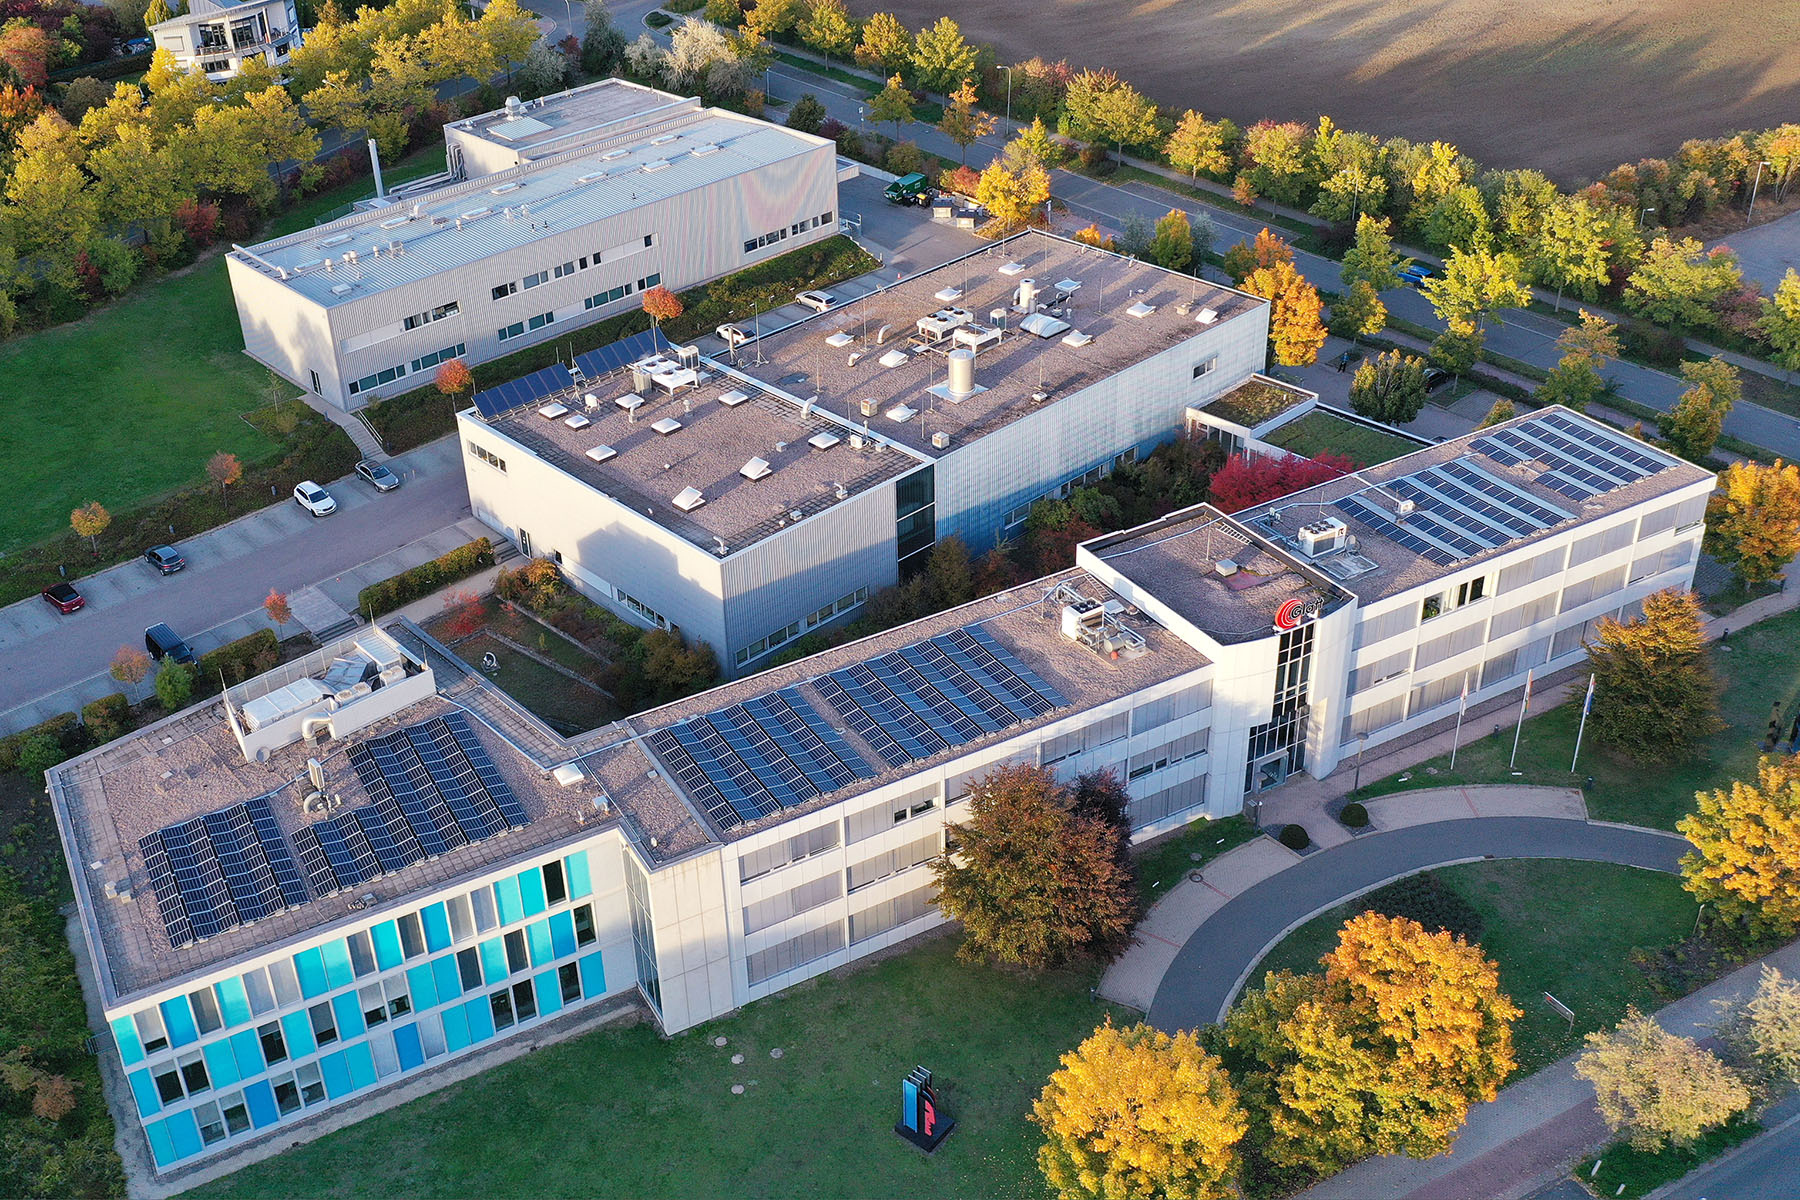 Glatt Ingenieurtechnik, company premises with technology center at the company's headquarters in Weimar, Germany